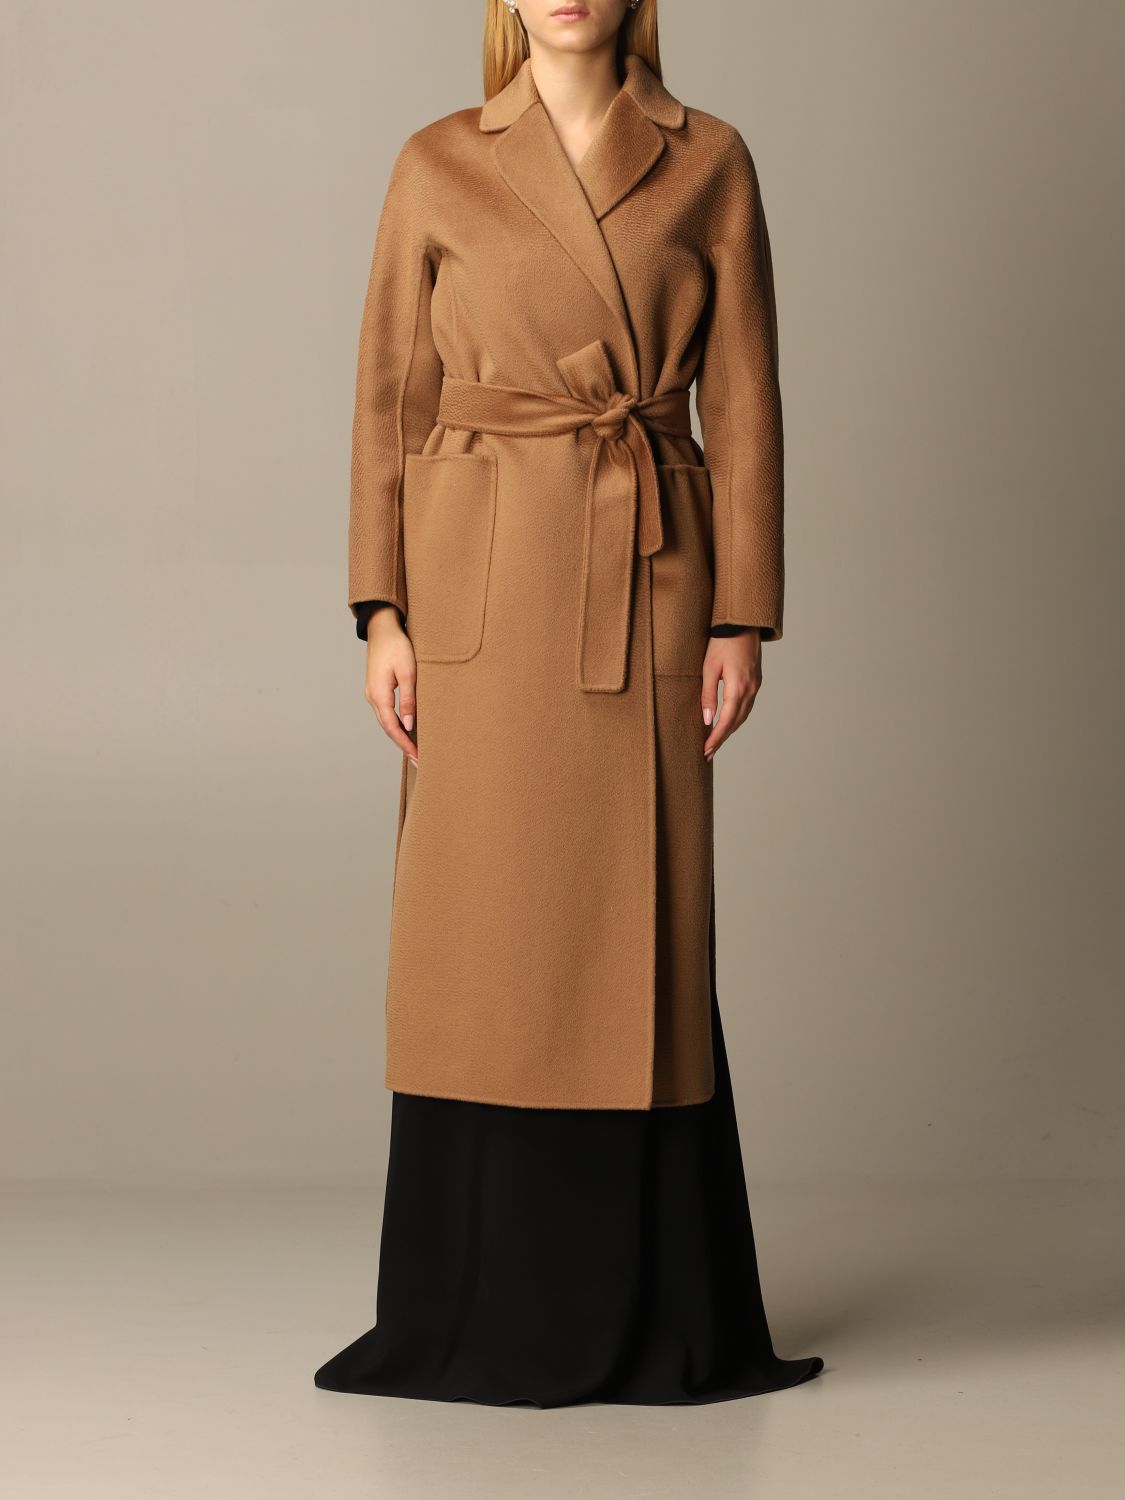 'S MAX MARA: Amore S Max Mara coat in virgin wool and cashmere - Camel ...